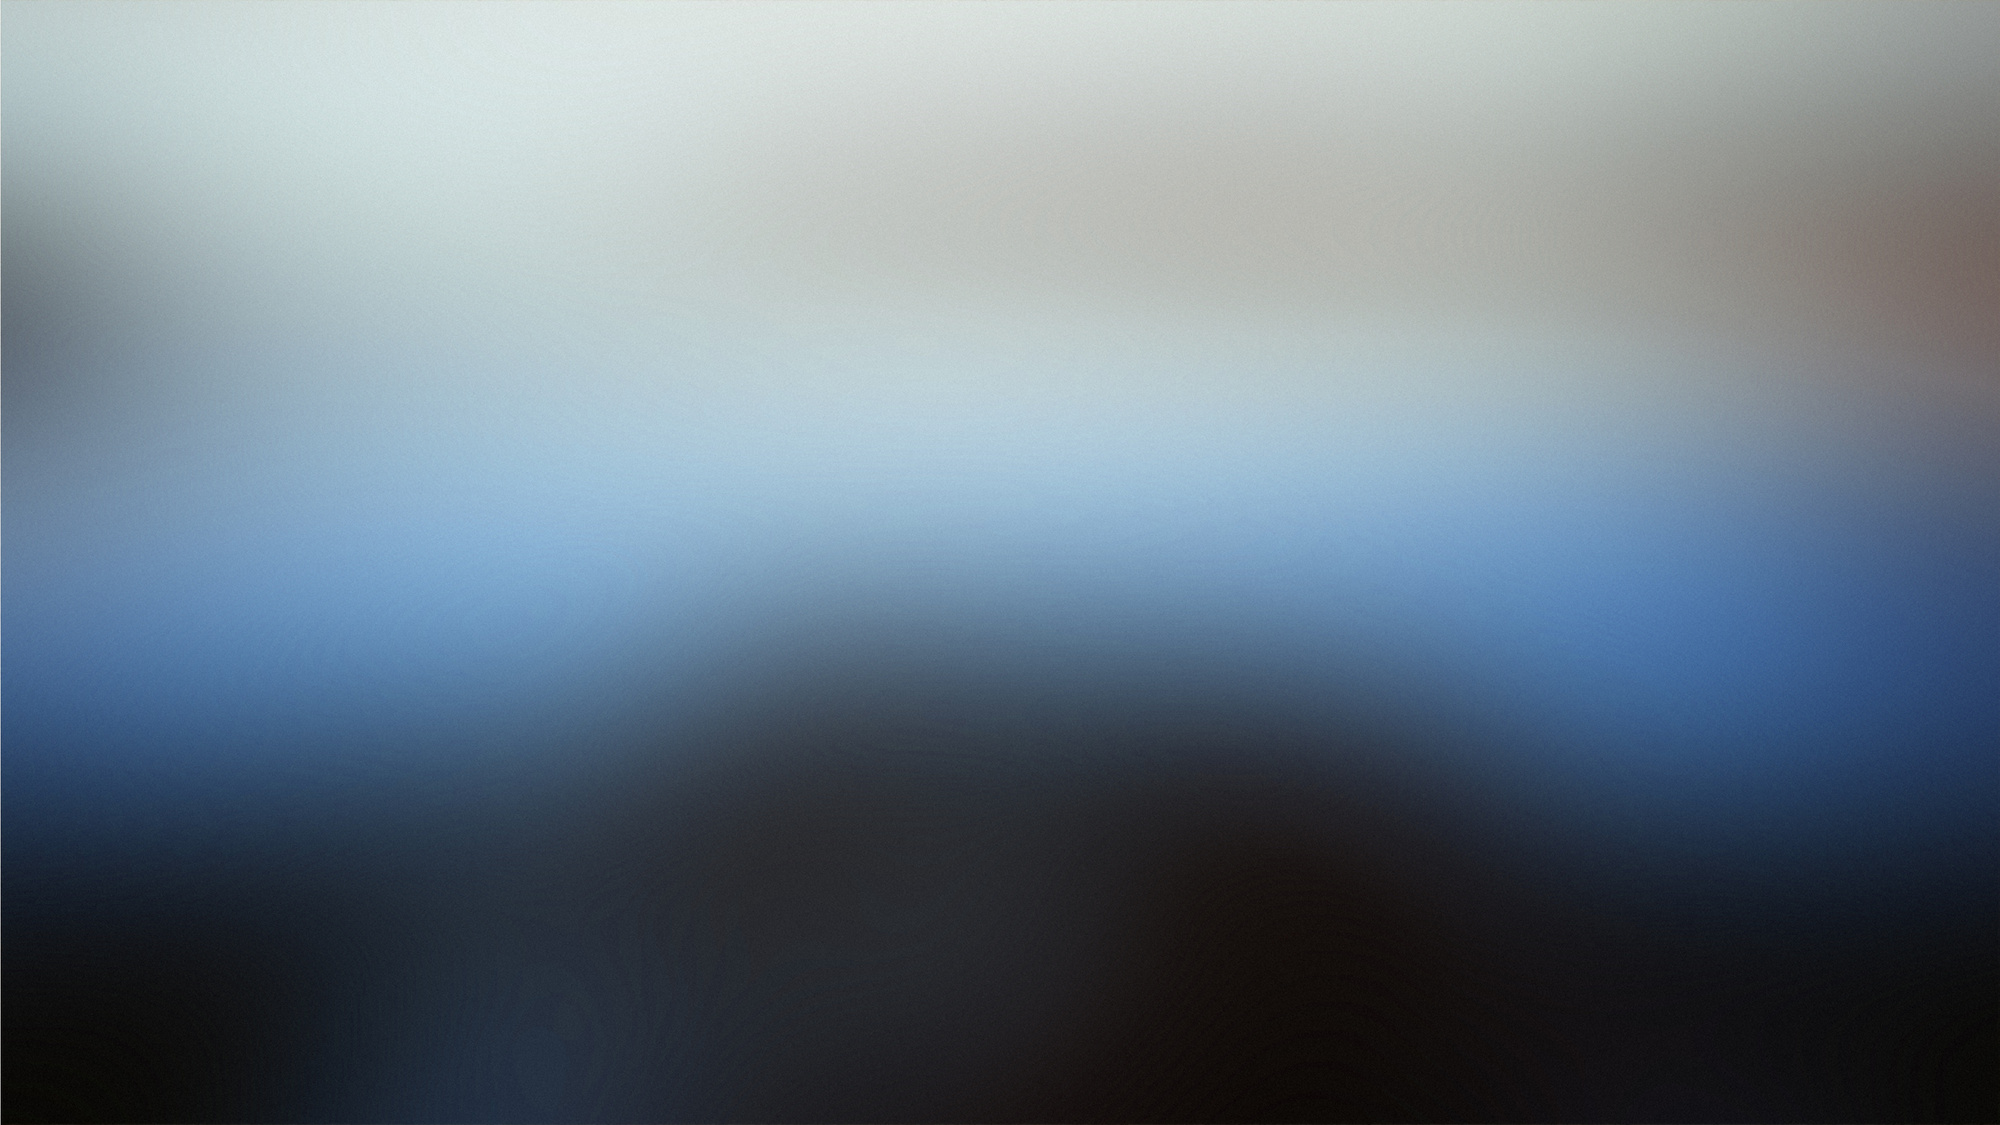 Gradient blurred noise wallpaper